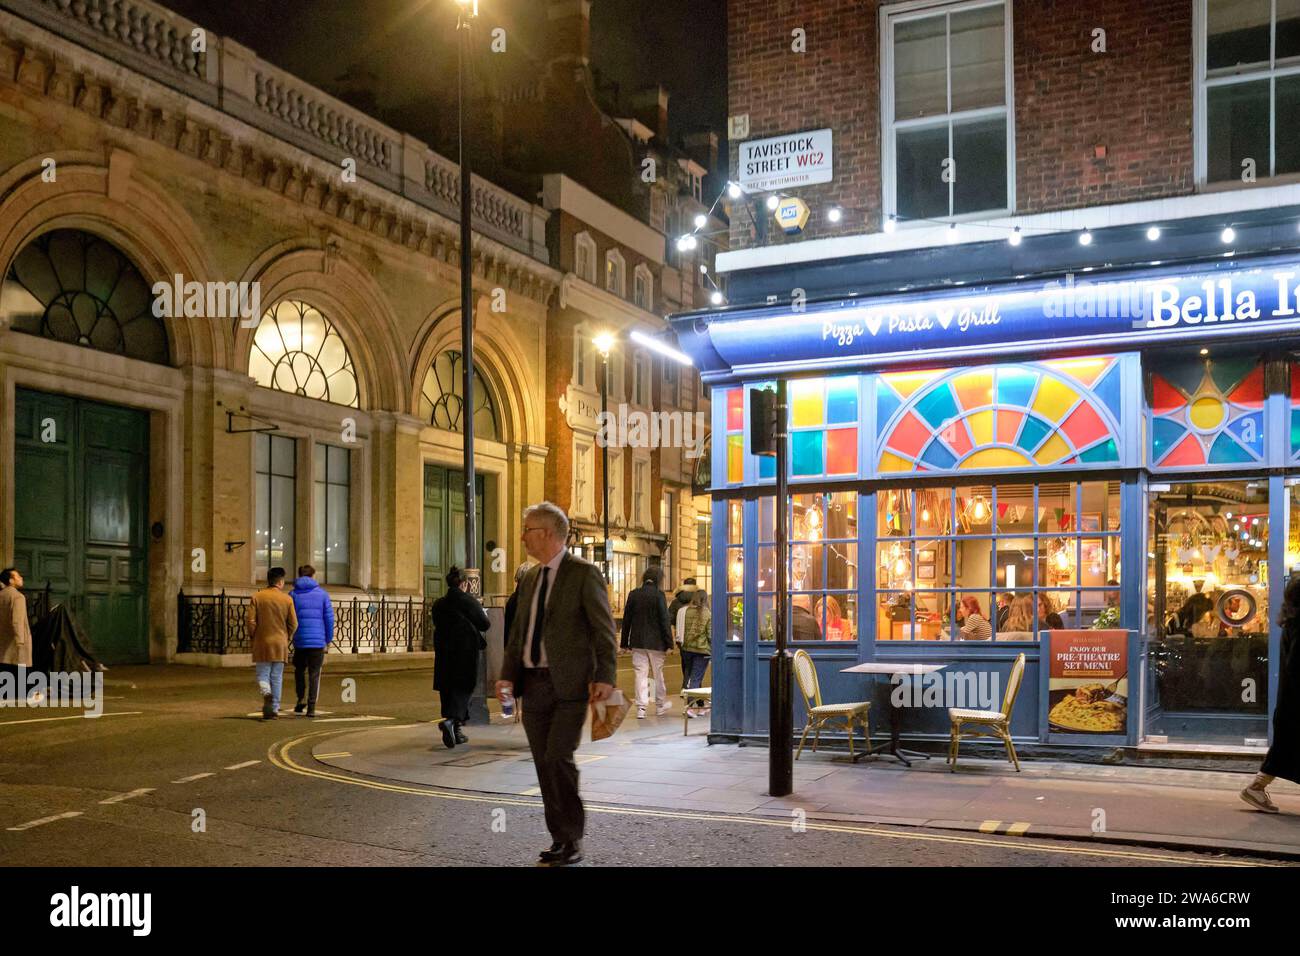 Tavistock Street, Soho, Night scene, Central London UK Stock Photo